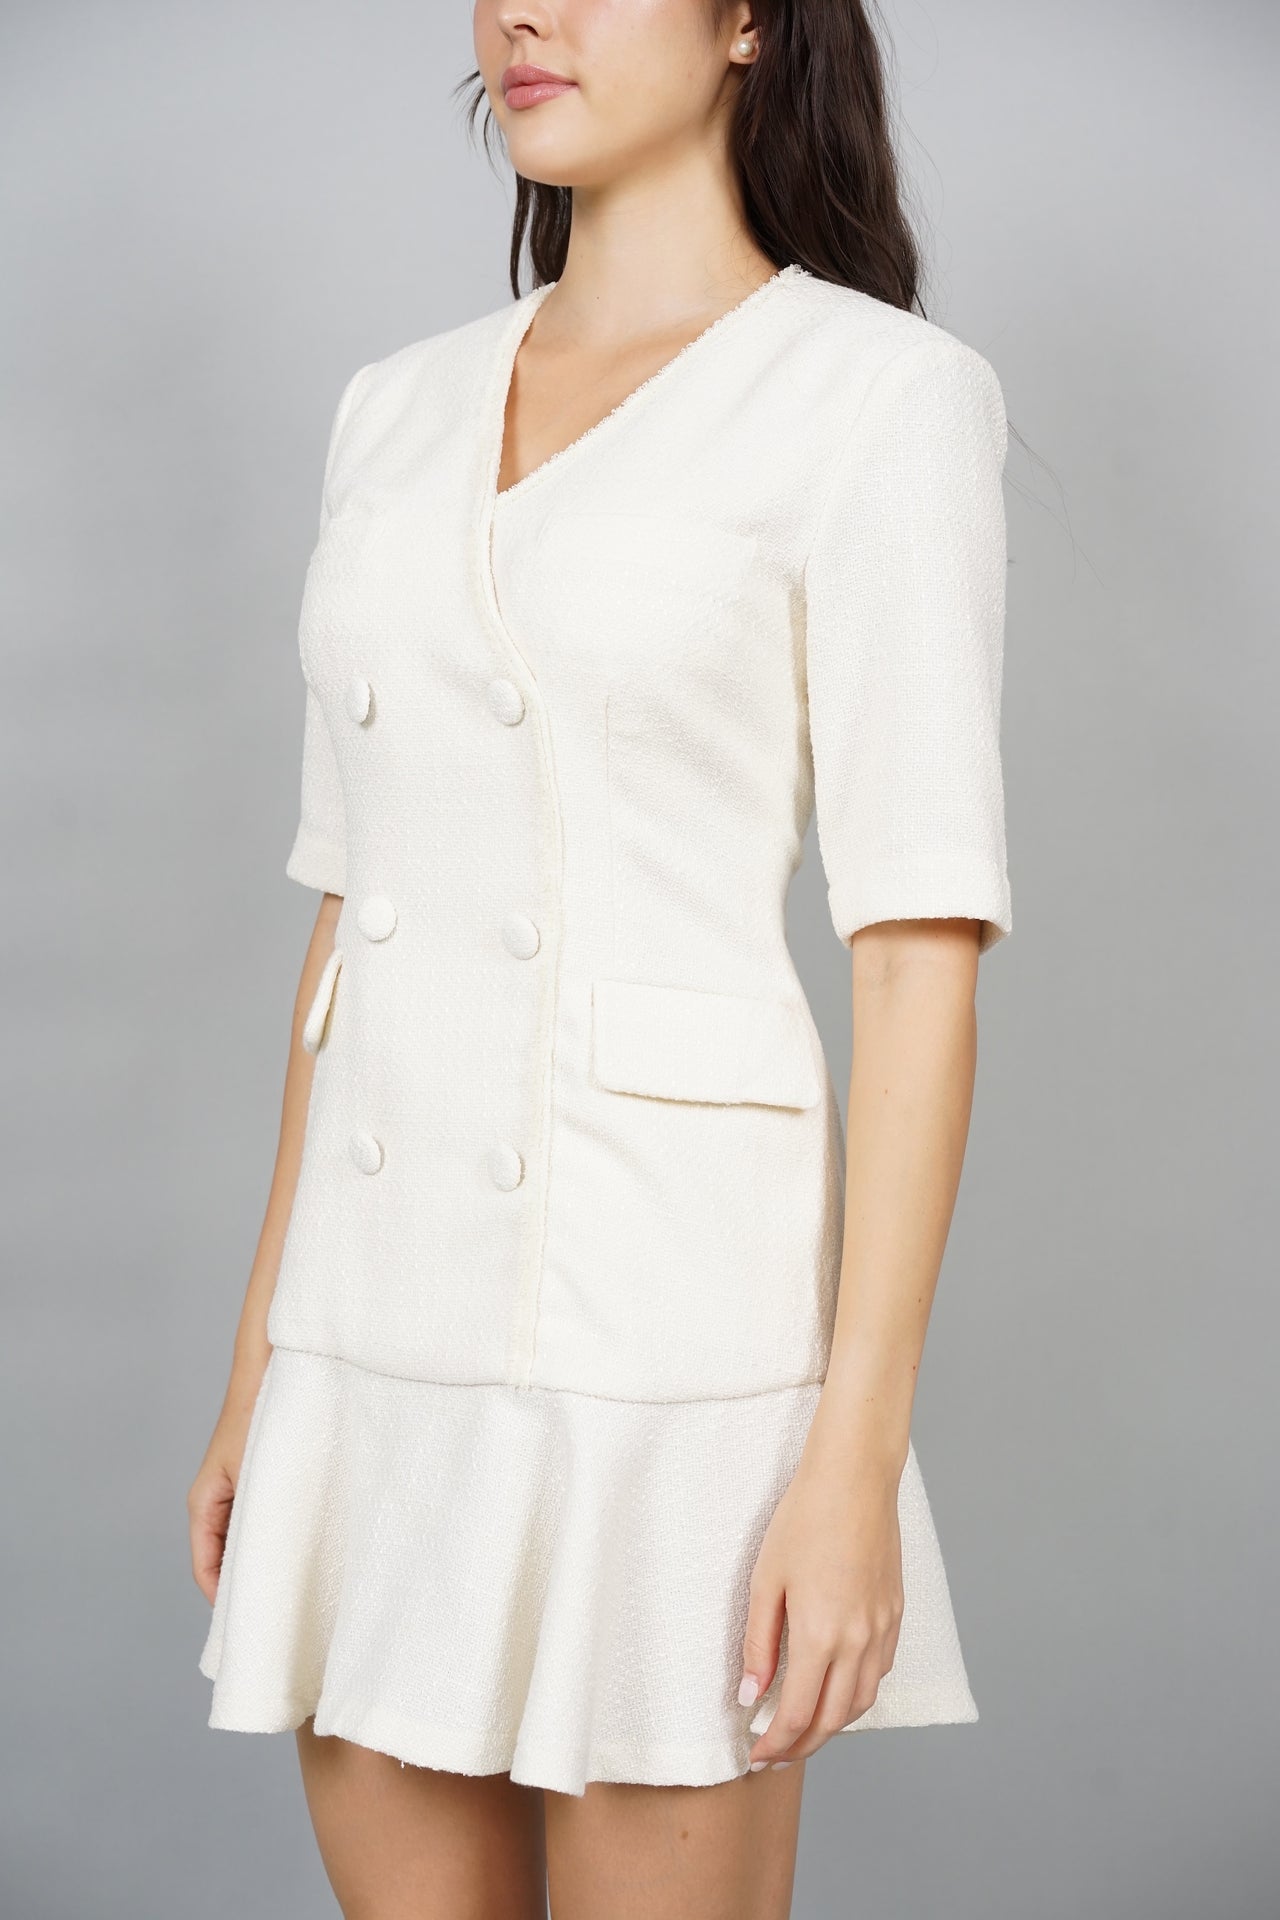 Blaire Tweed Dress in Ivory